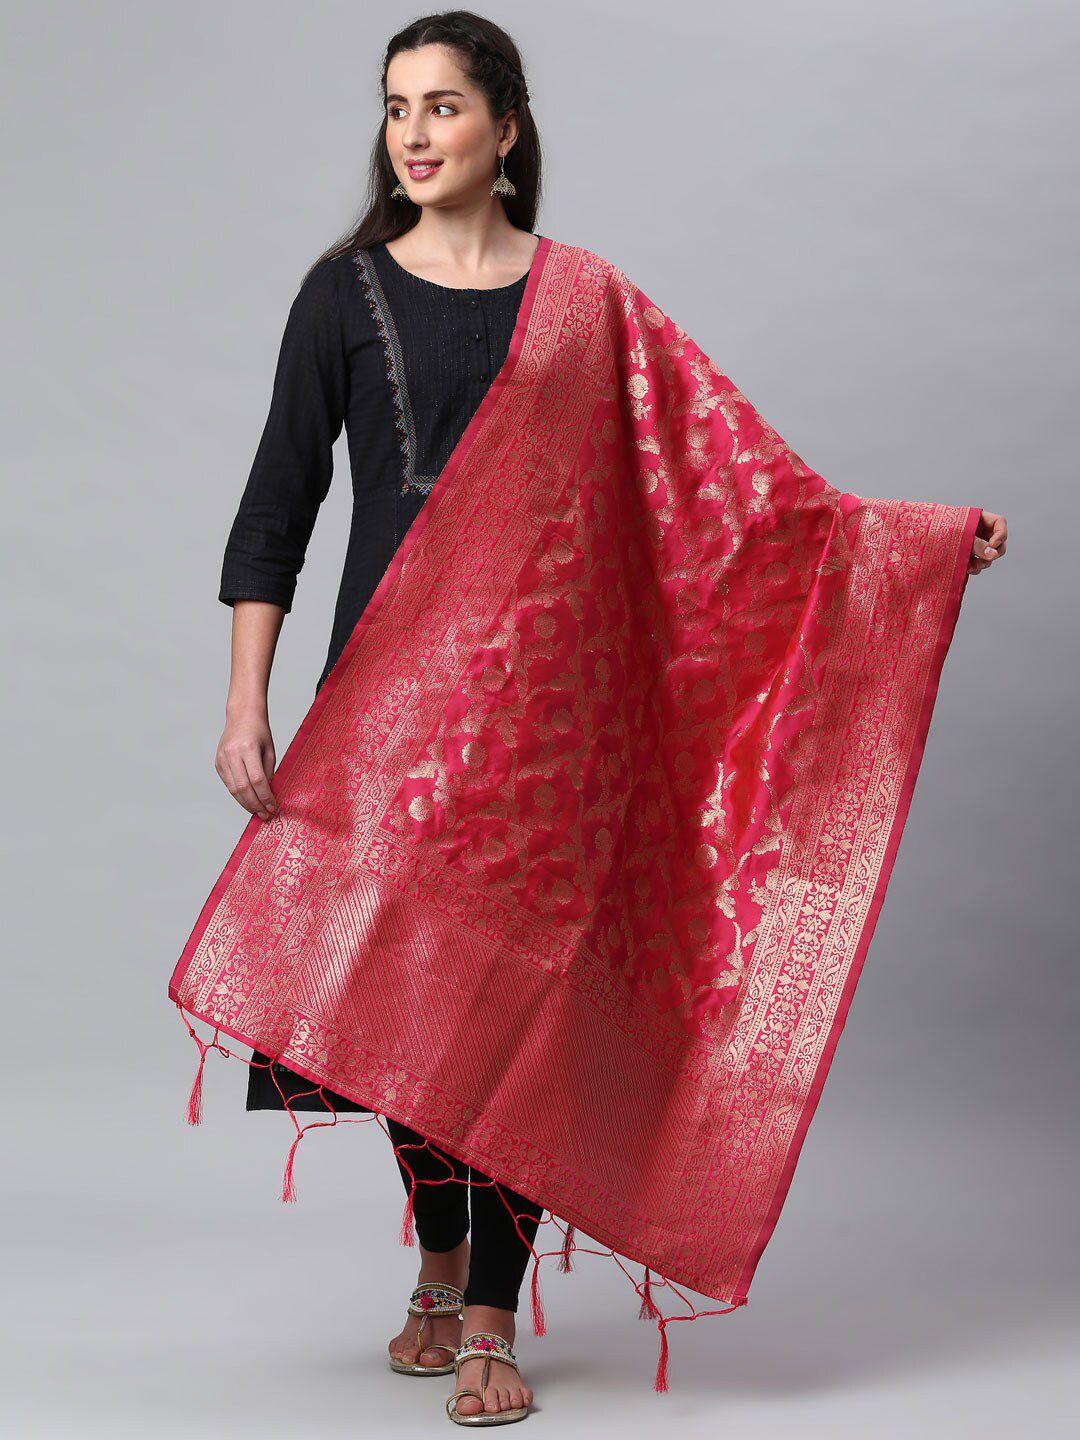 lilots red & gold-toned ethnic motifs woven design dupatta